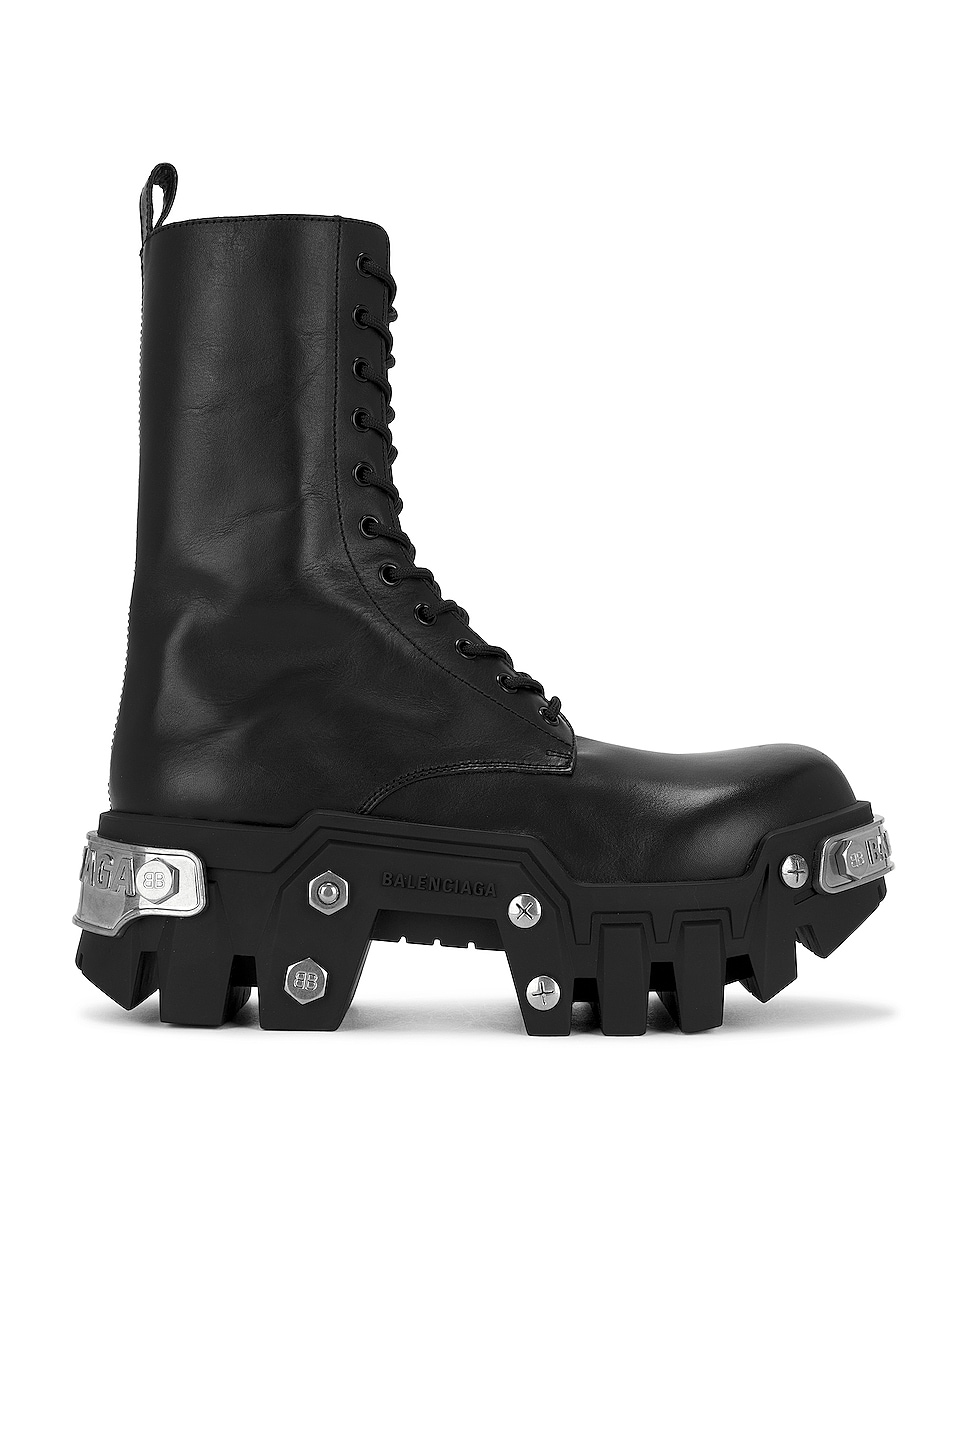 Image 1 of Balenciaga Bulldozer Lace Up Boot in Black, Silver